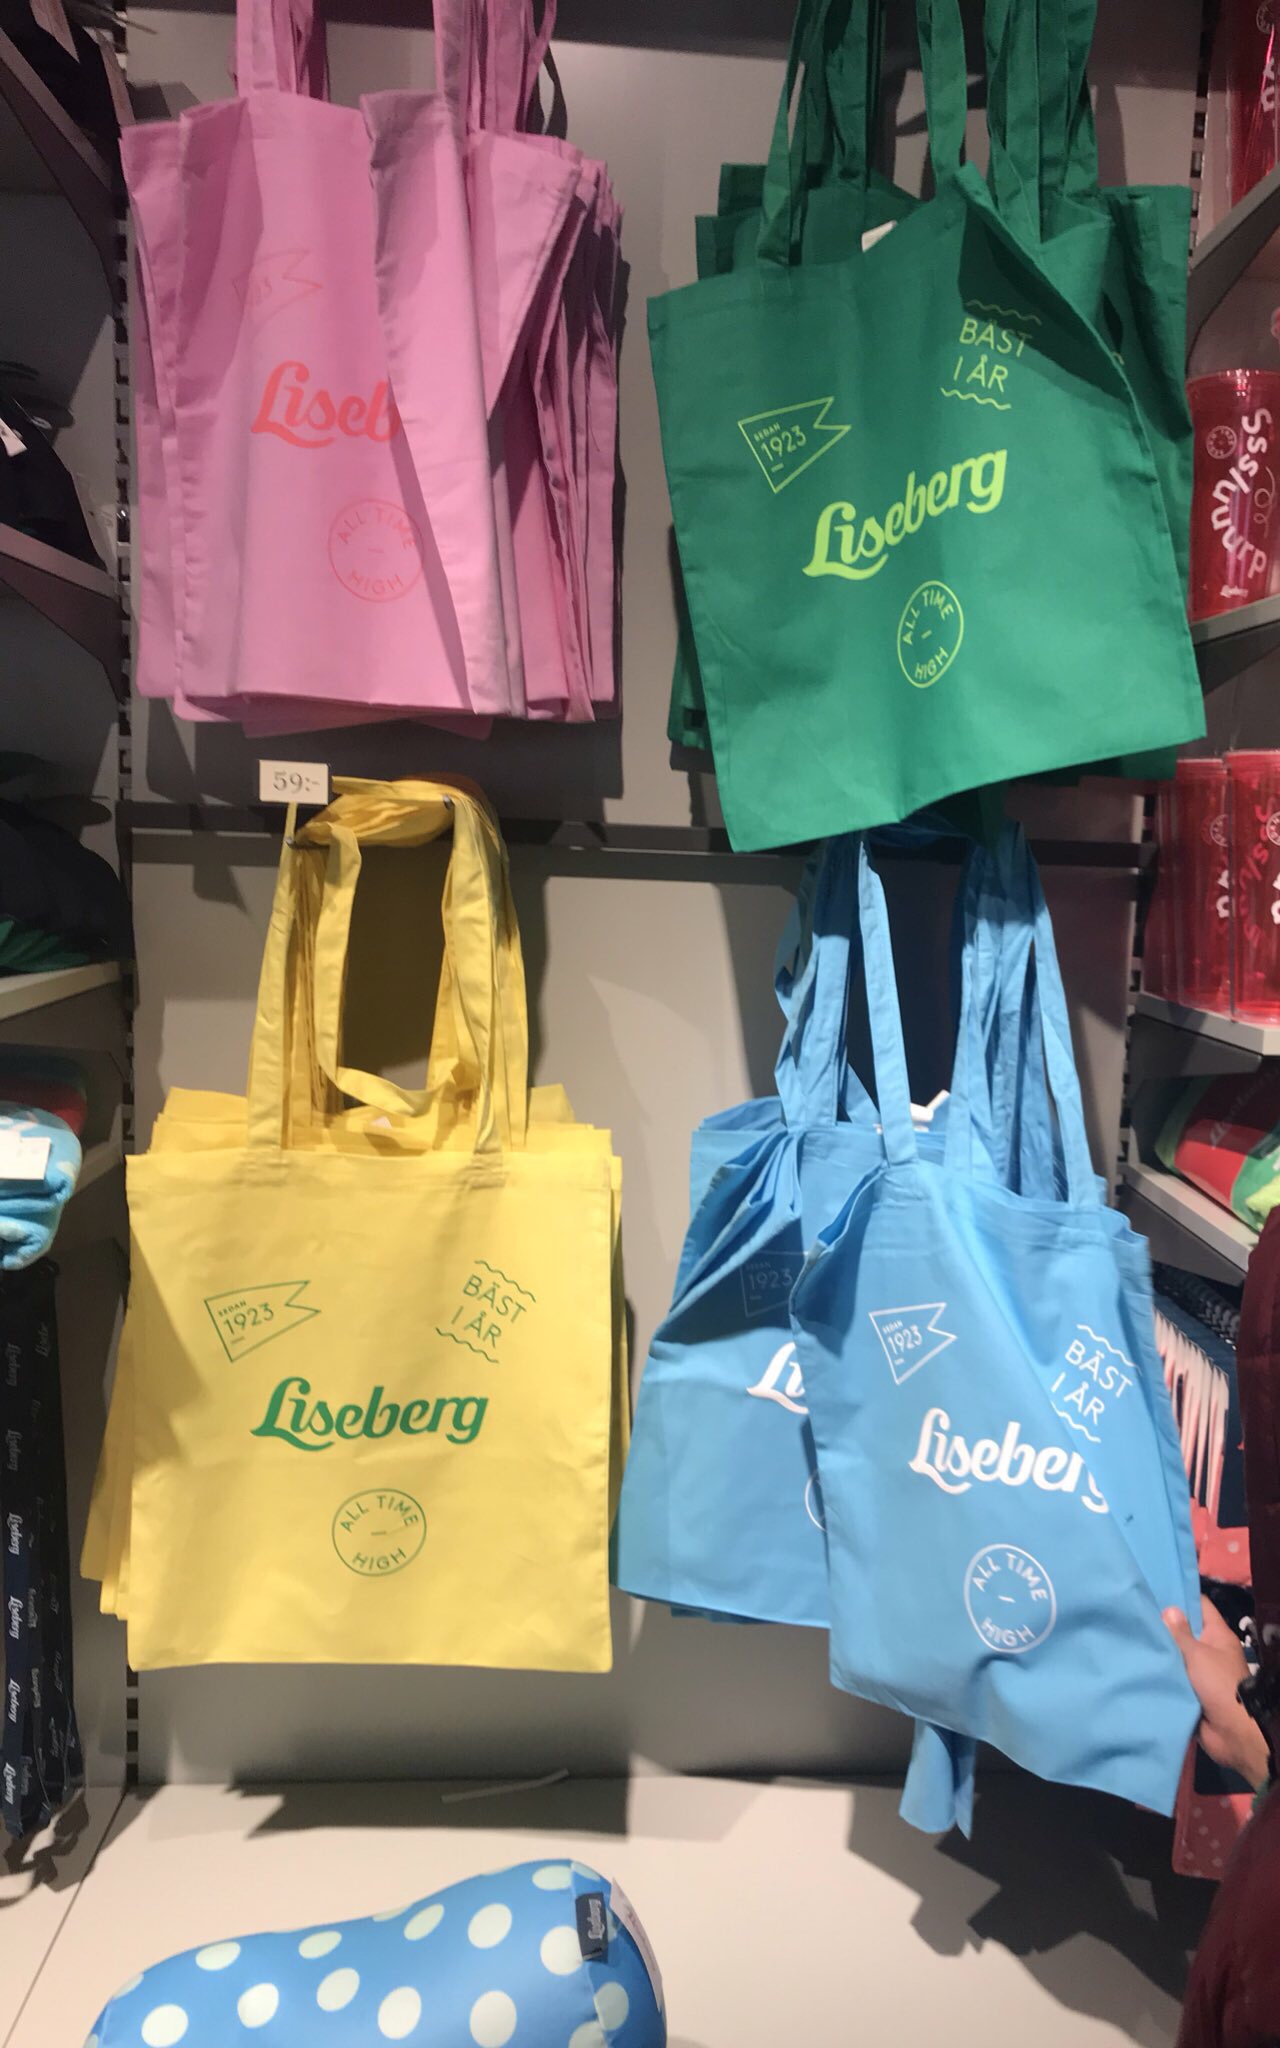 The souvenir shop at Liseberg, Gothenburg (Sweden) selling cloth bags